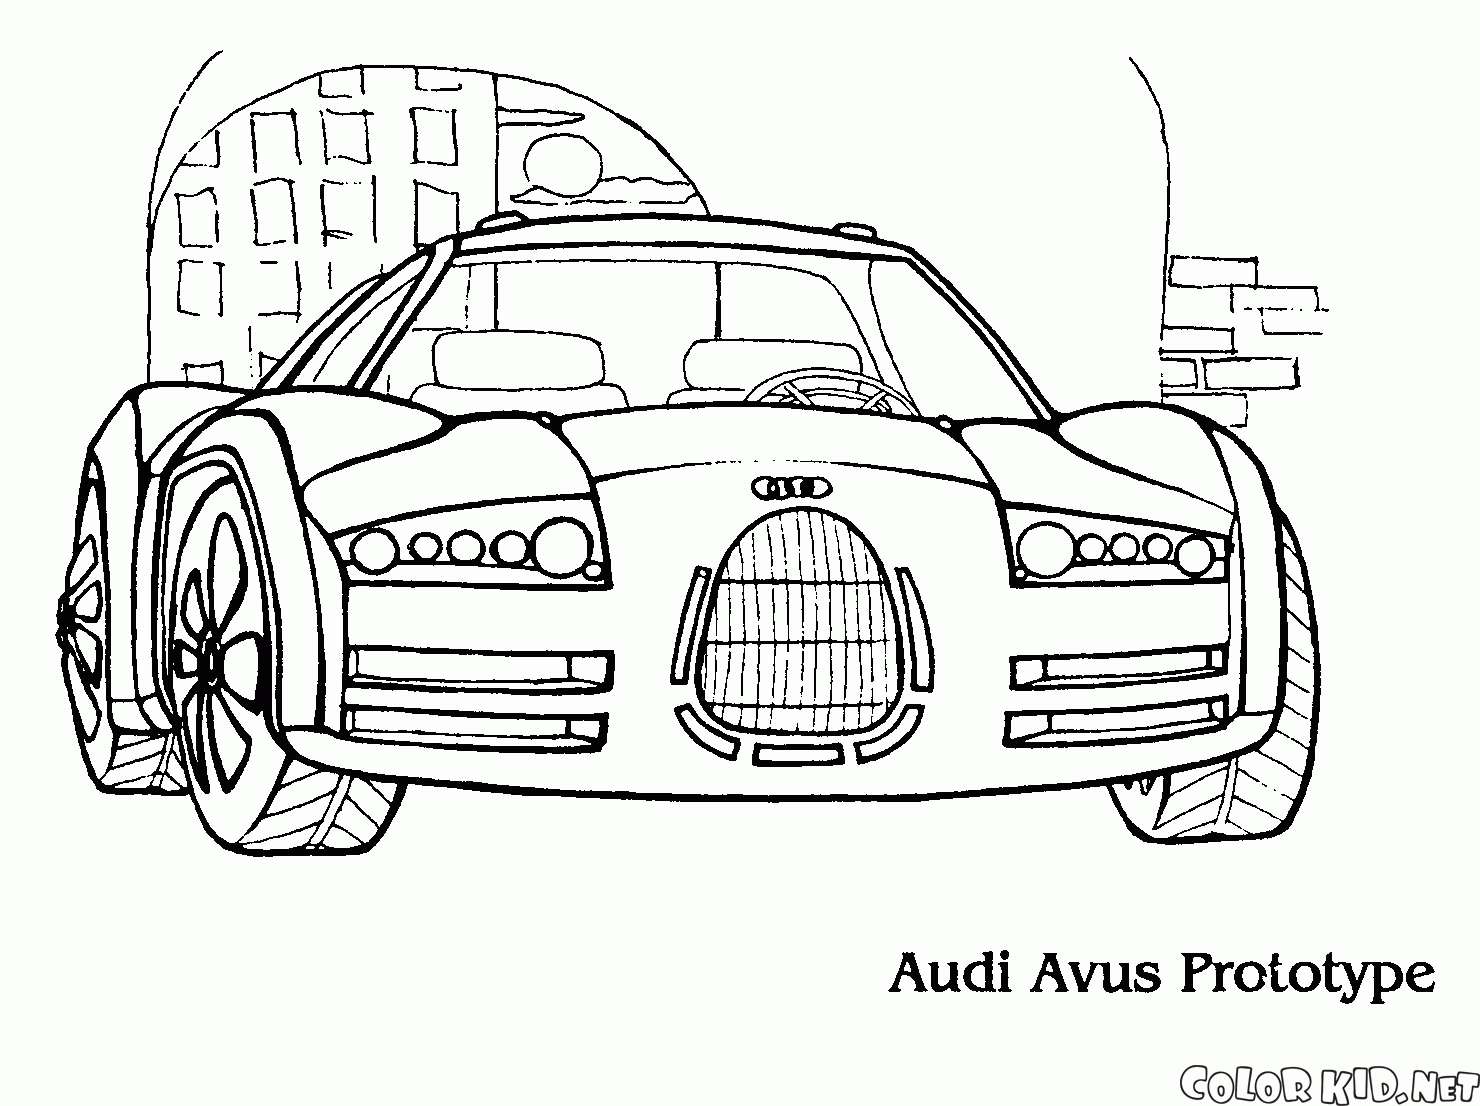 O novo protótipo Audi